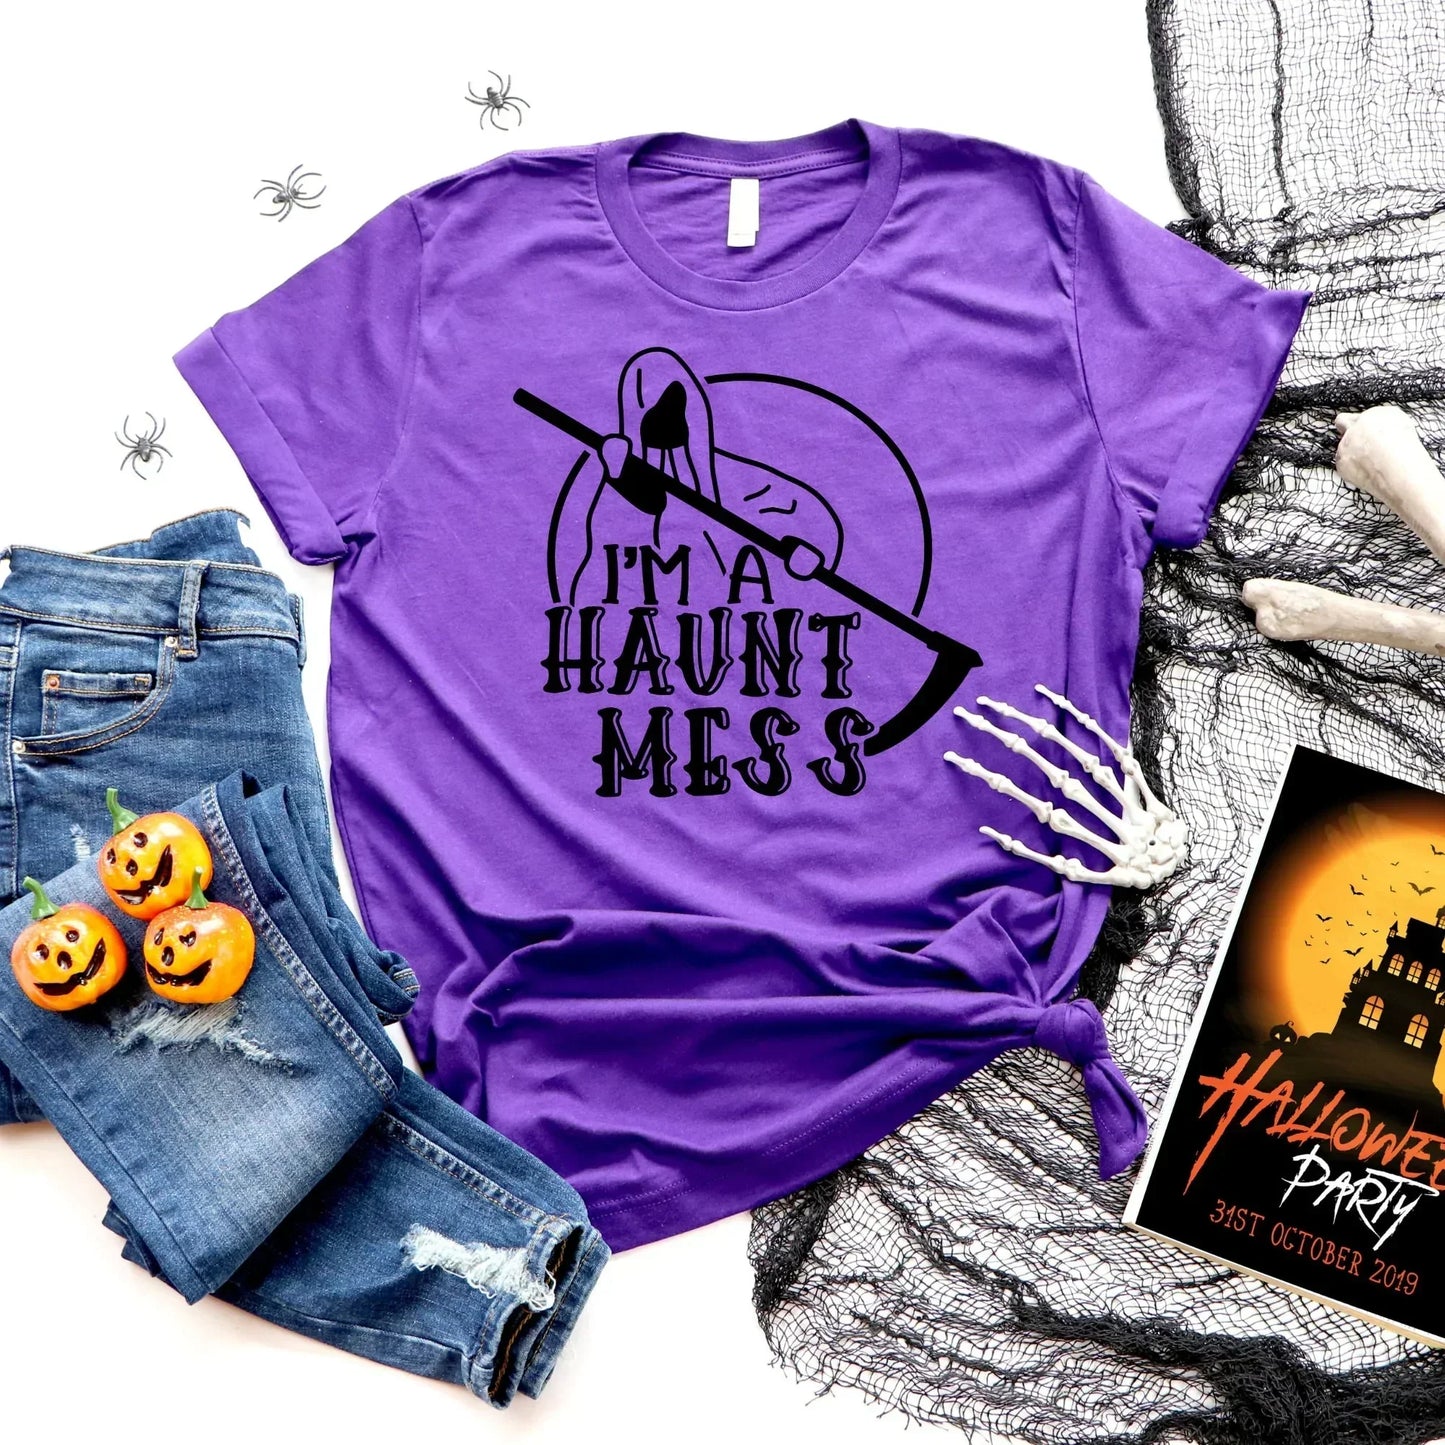 Halloween Sweatshirt, Haunt Mess, Funny Halloween Crewneck, Party T-Shirt, Cute Women's Hoodie, Witch Shirt, Trick and Treat, Vintage Tee